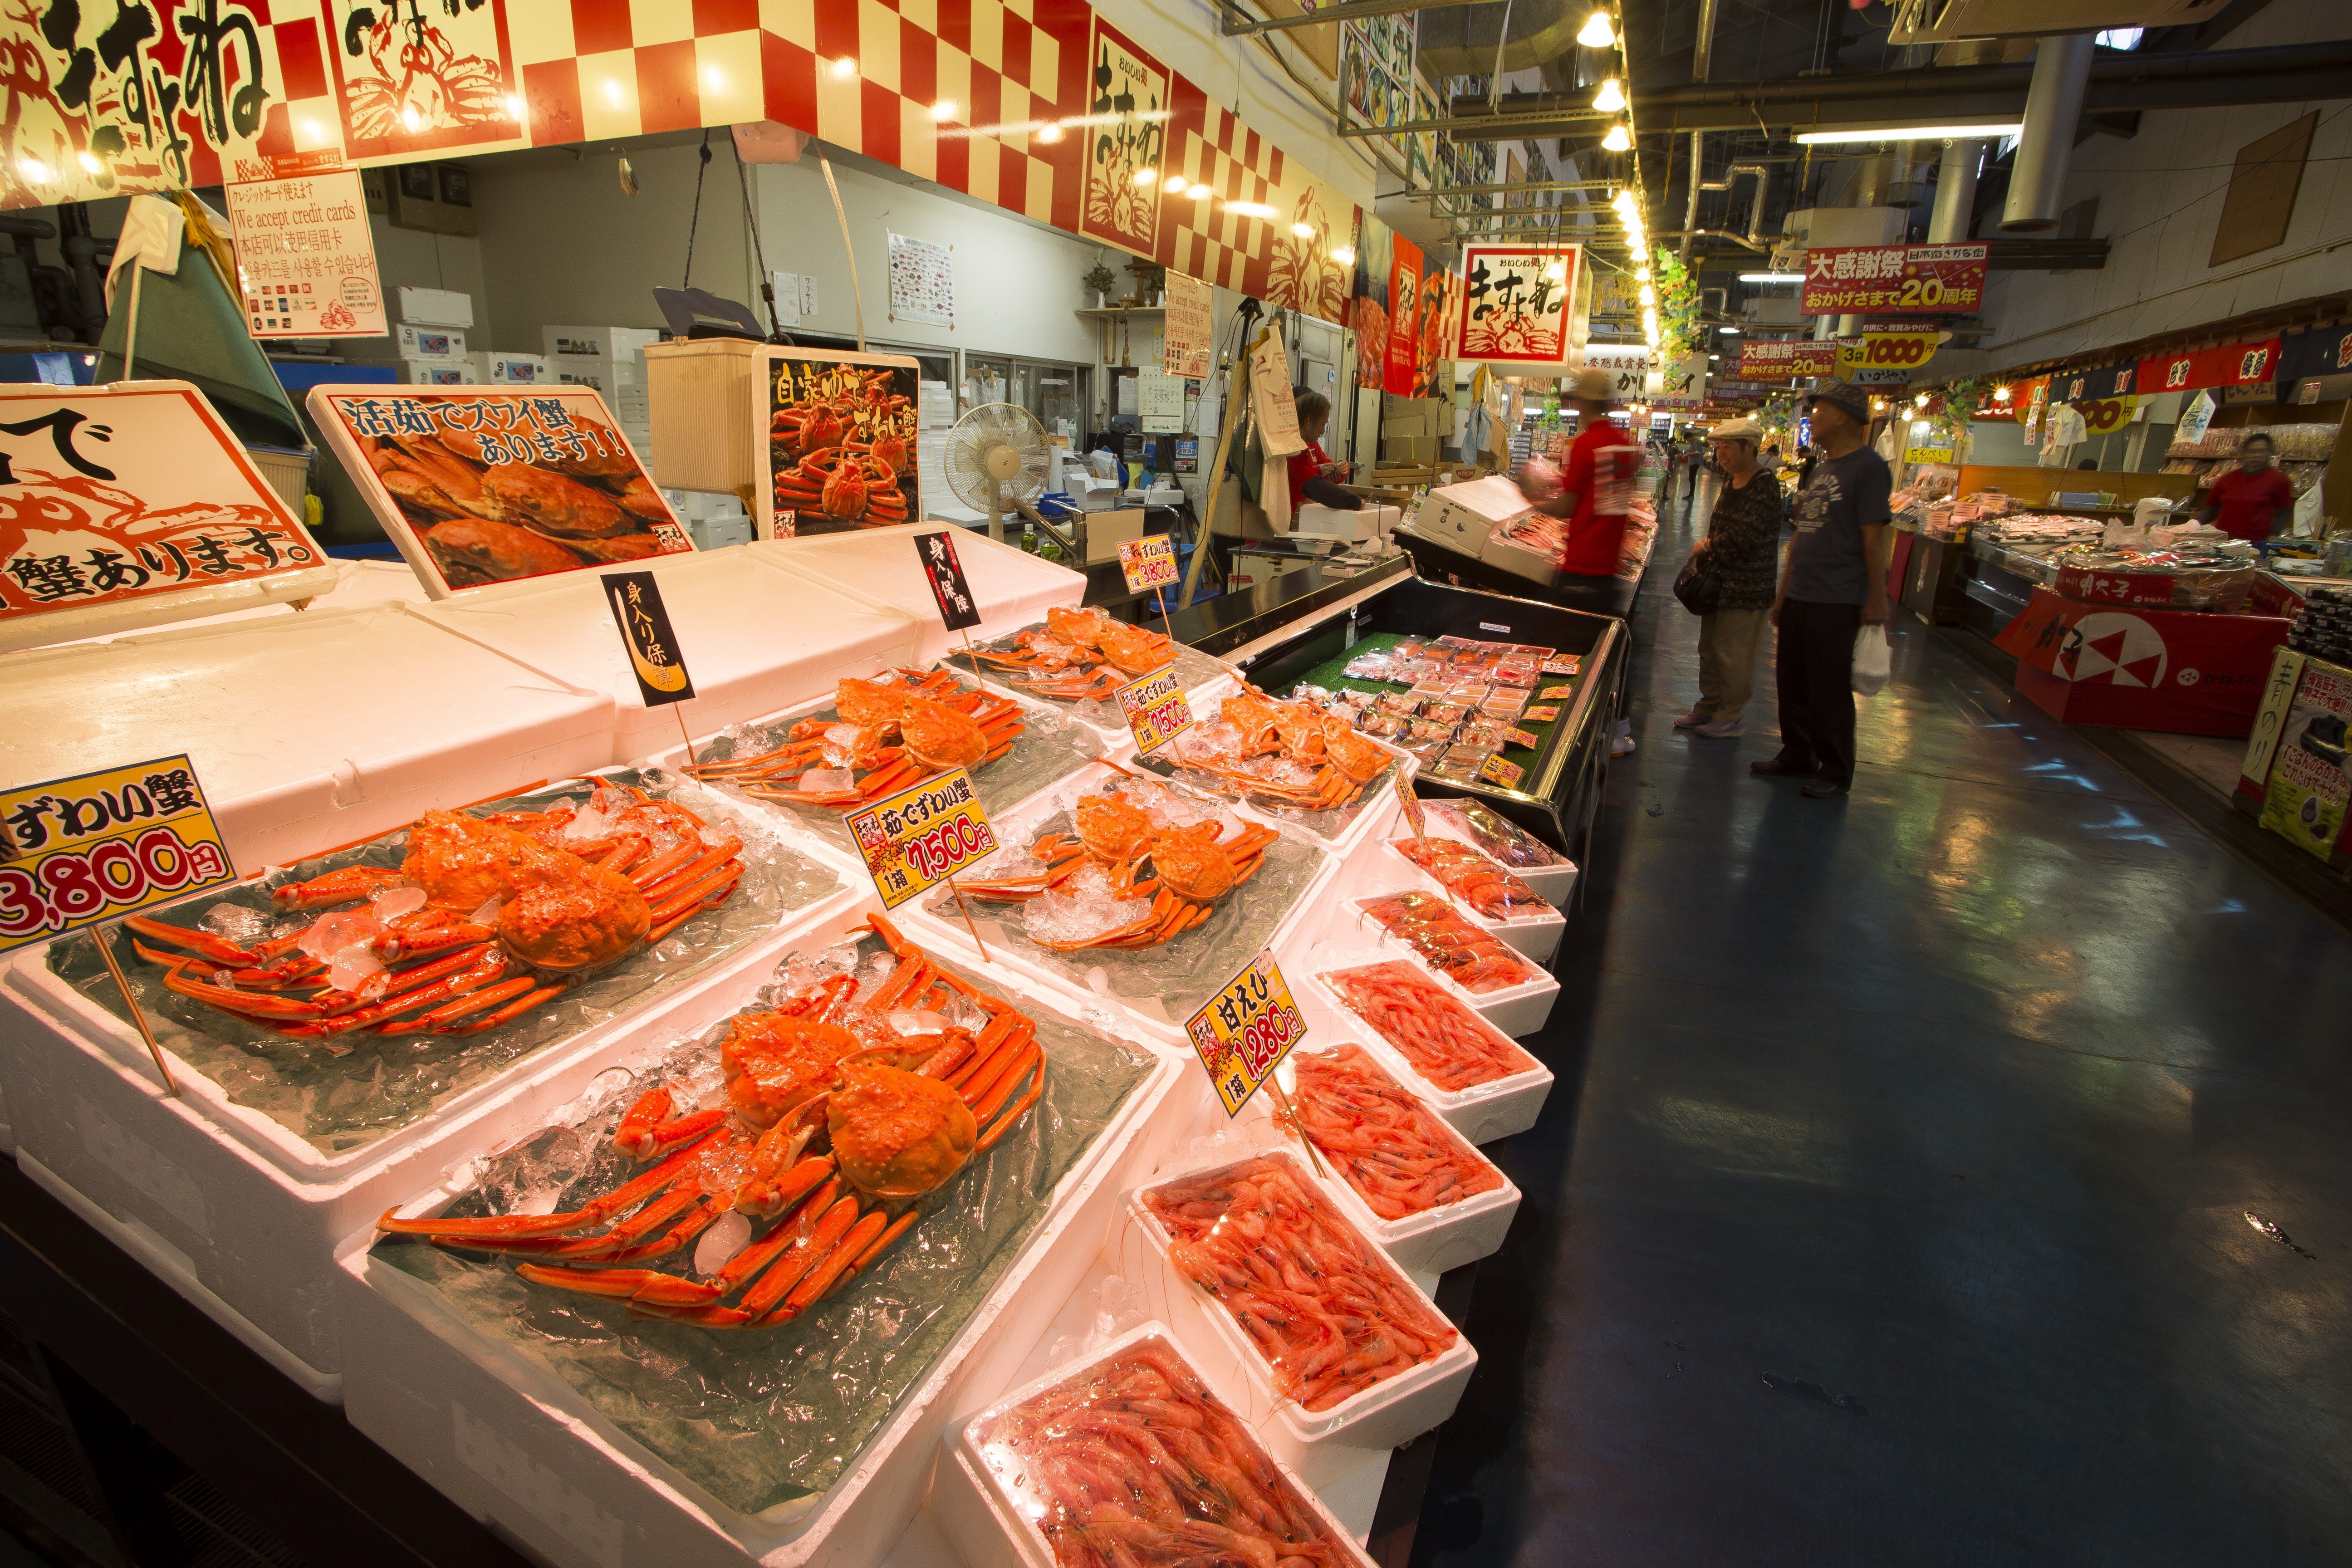 Tsuruga City, Fukui Prefecture Nihonkai Sakanamachi: Seafood market popular for crab seafood rice bowls and conveyor belt sushi